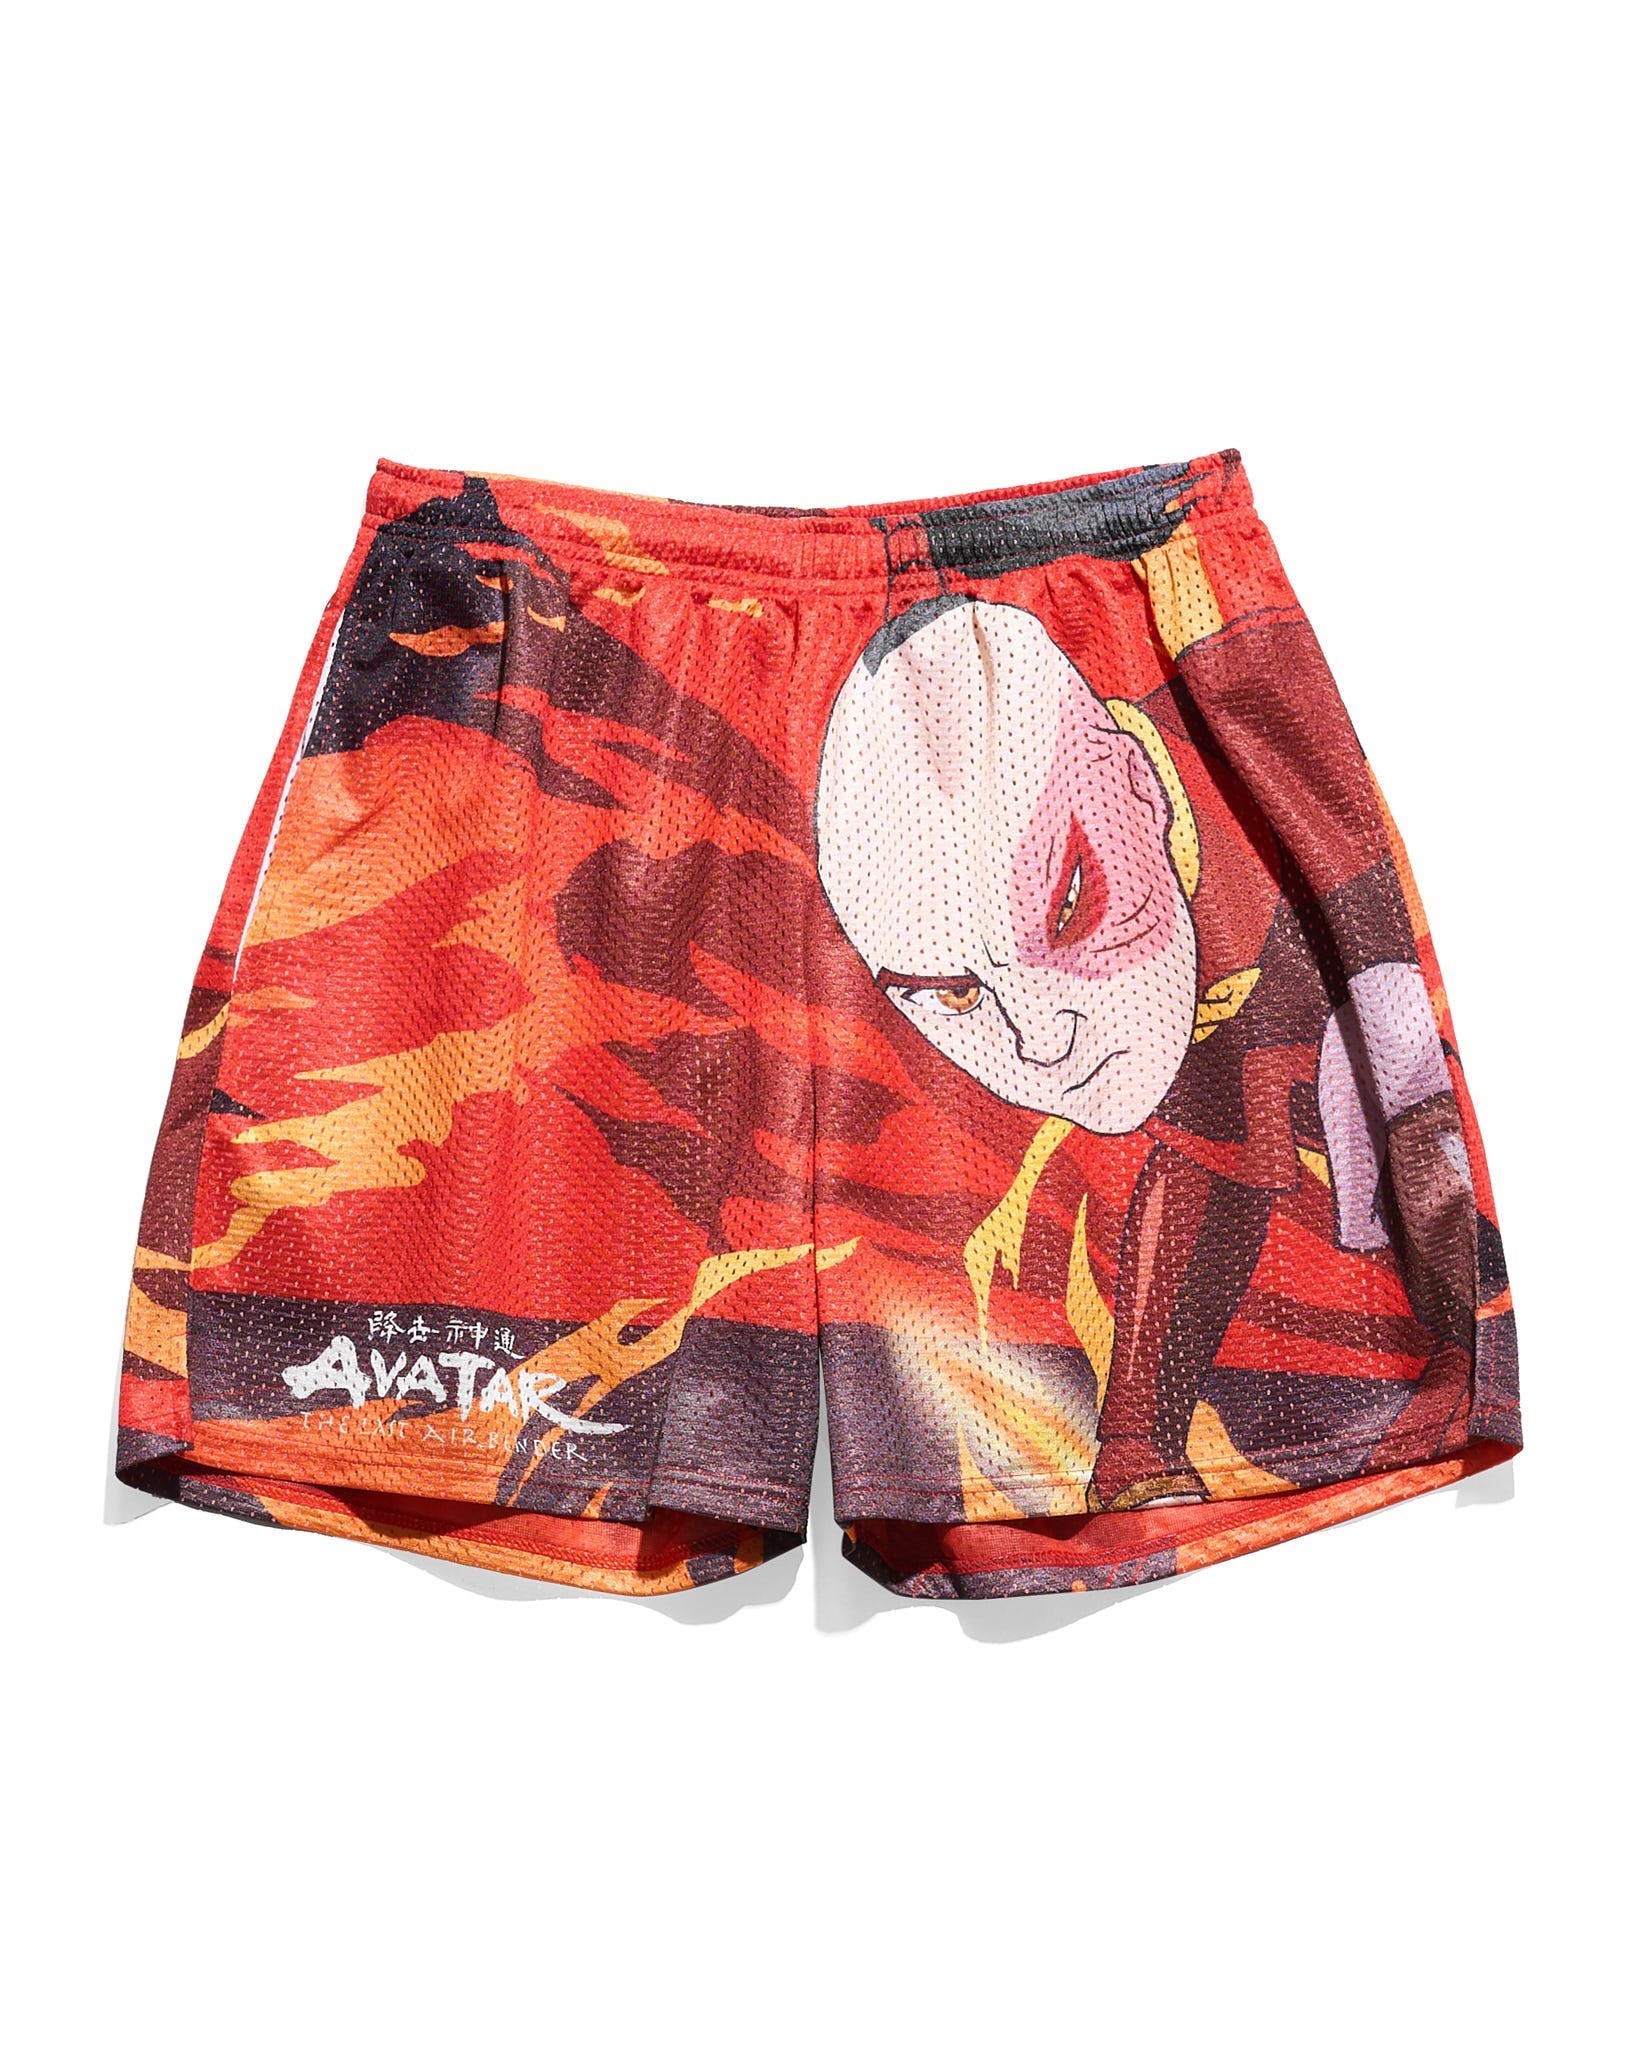 Avatar Zuko Shorts